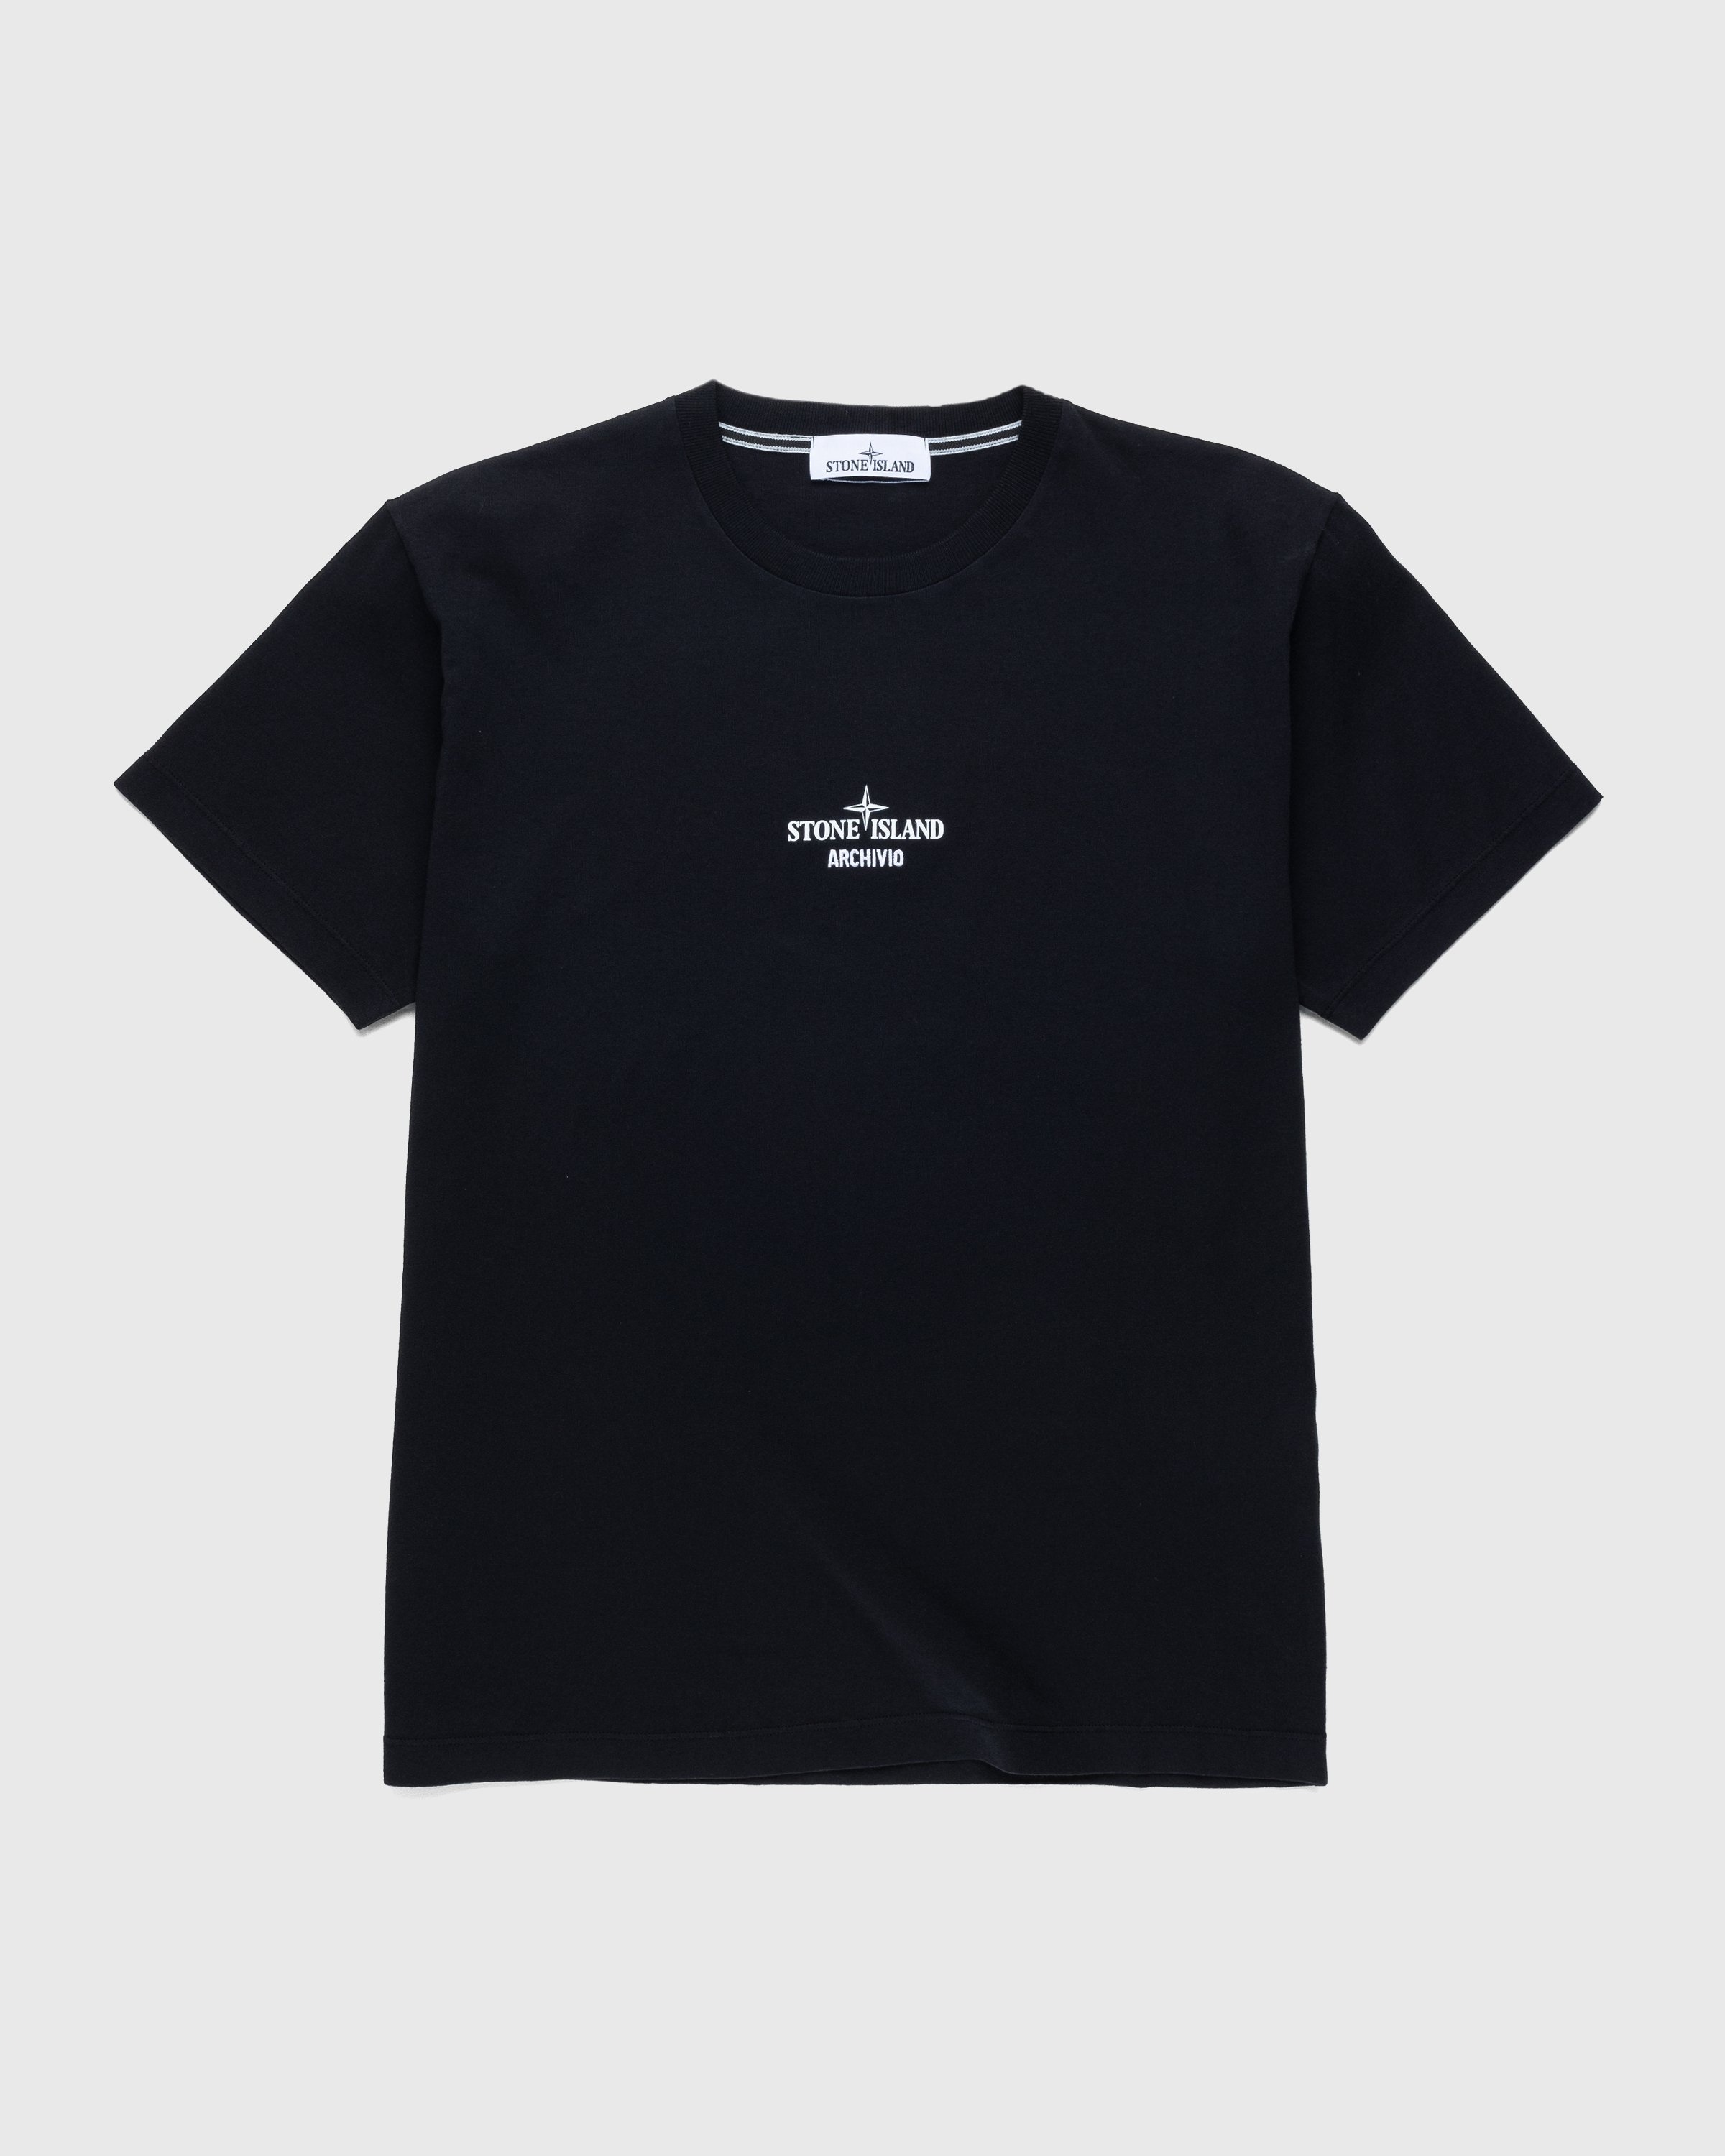 Stone Island – Archivio T-Shirt Black - Tops - Black - Image 1